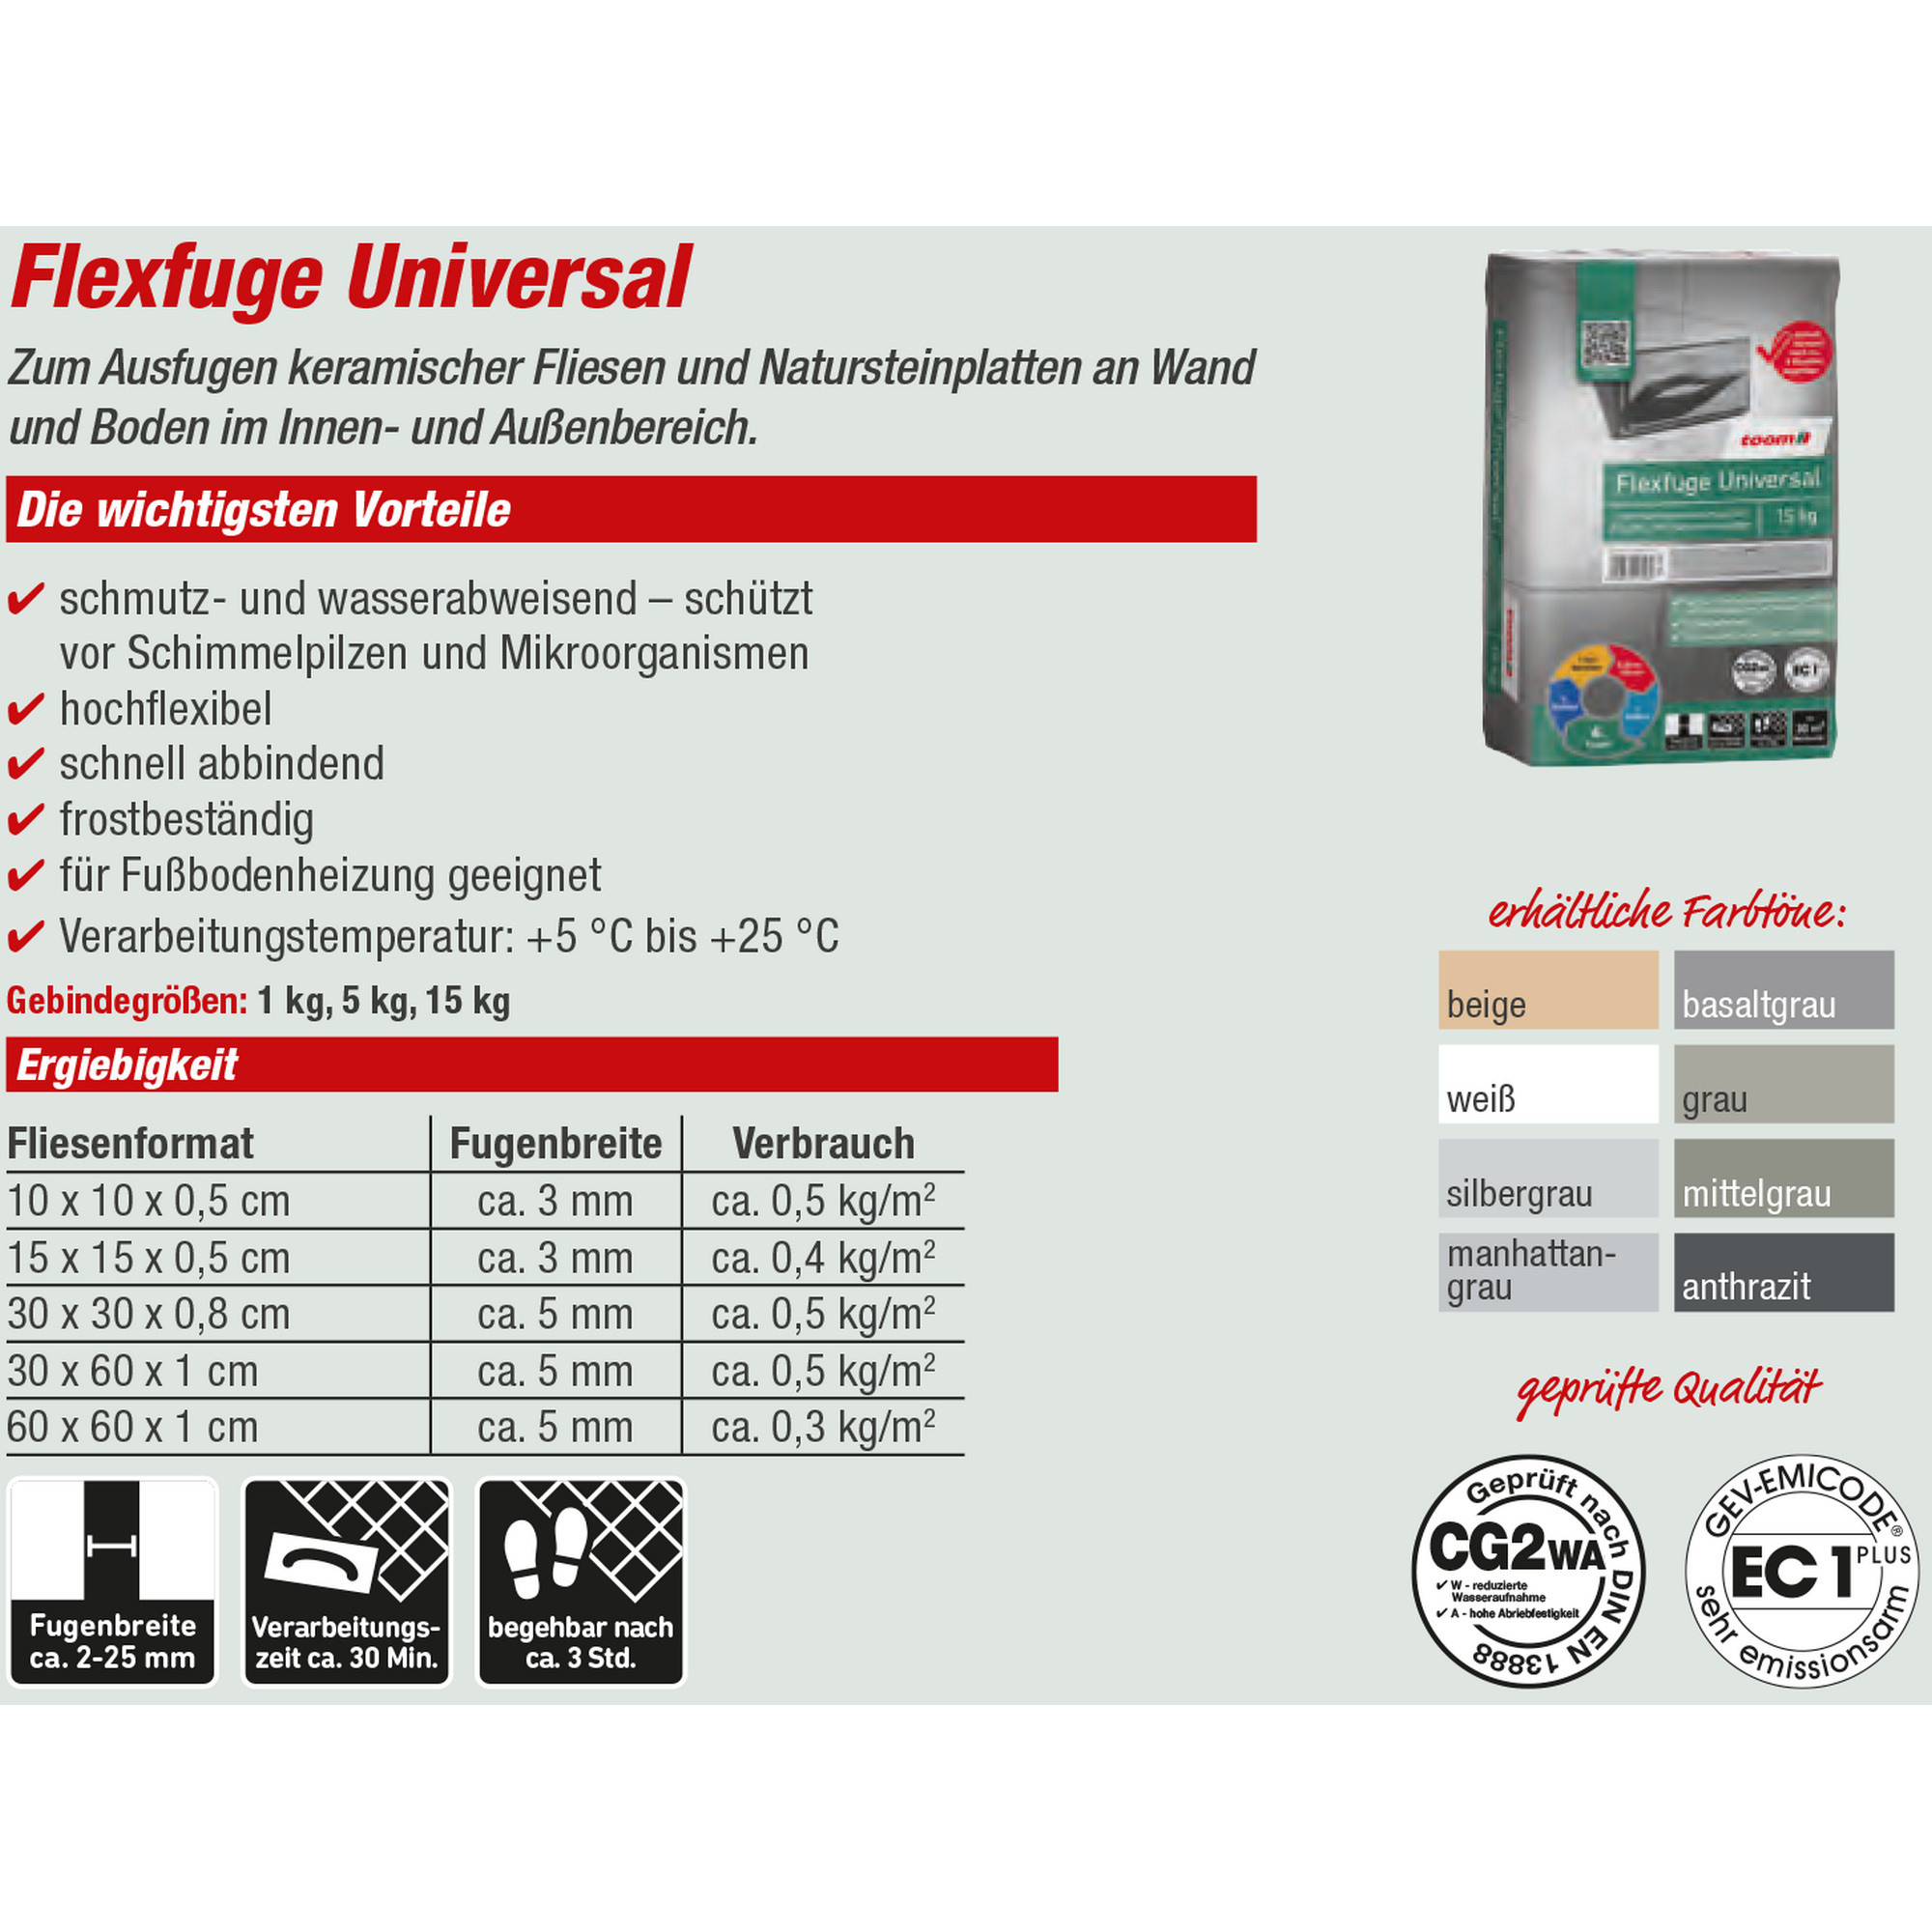 Flexfuge 'Universal' silbergrau 1 kg + product picture